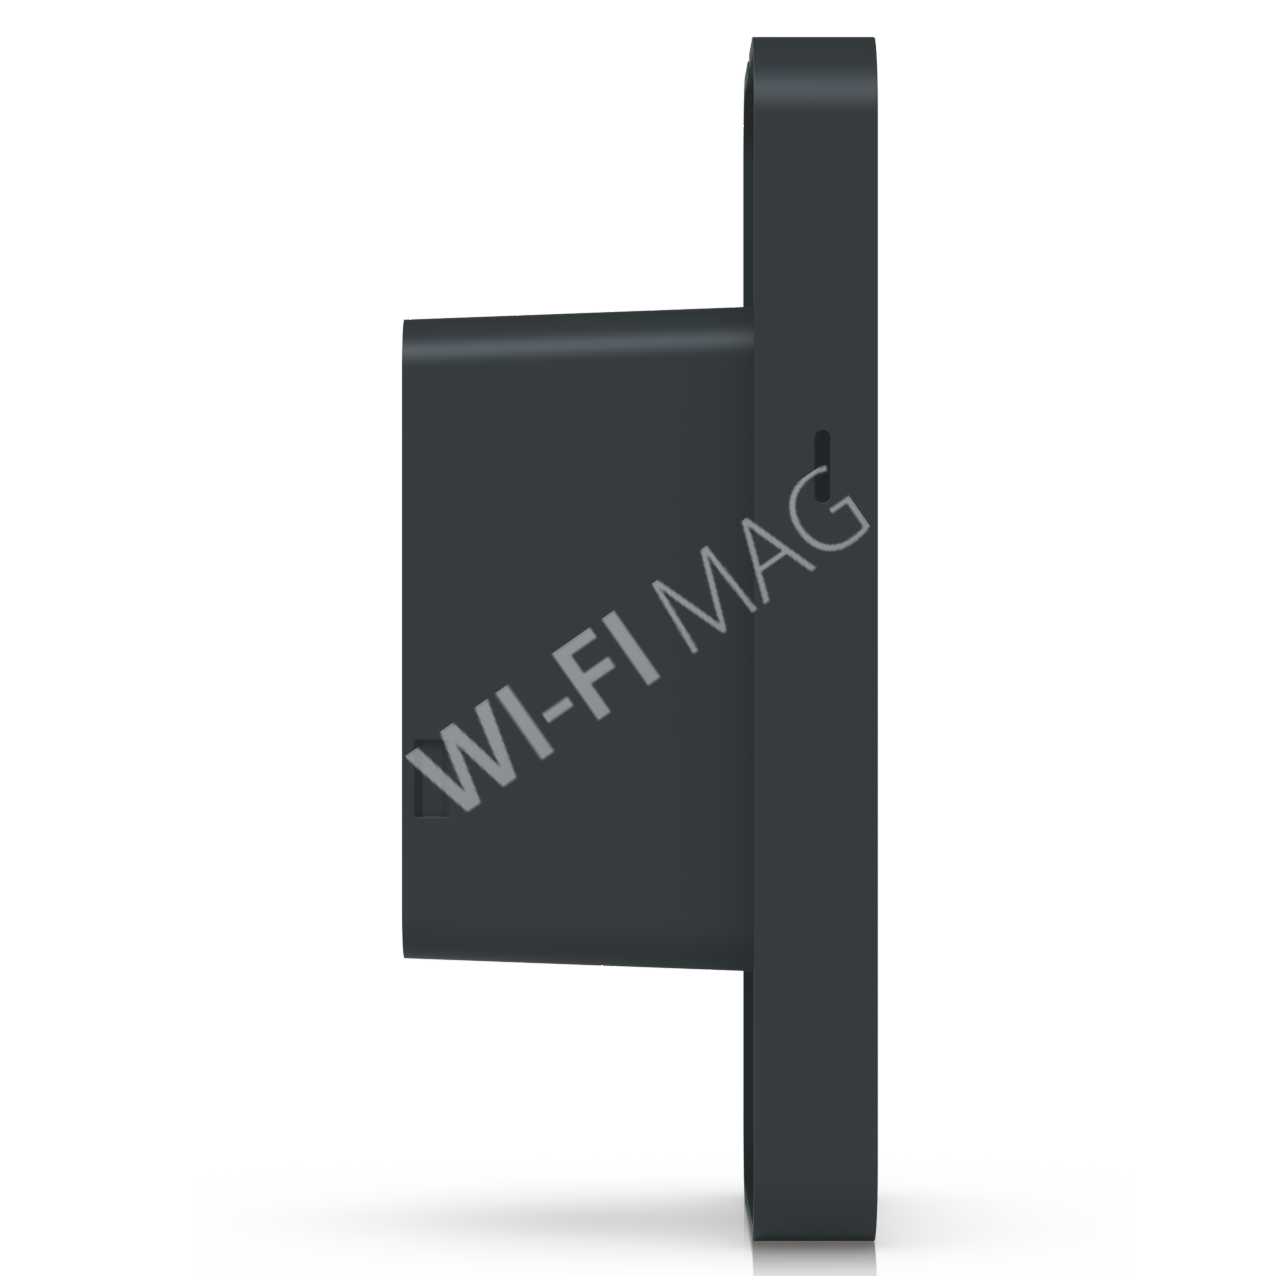 Ubiquiti UniFi Access Reader G2 Black, черный NFC/Bluetooth считыватель